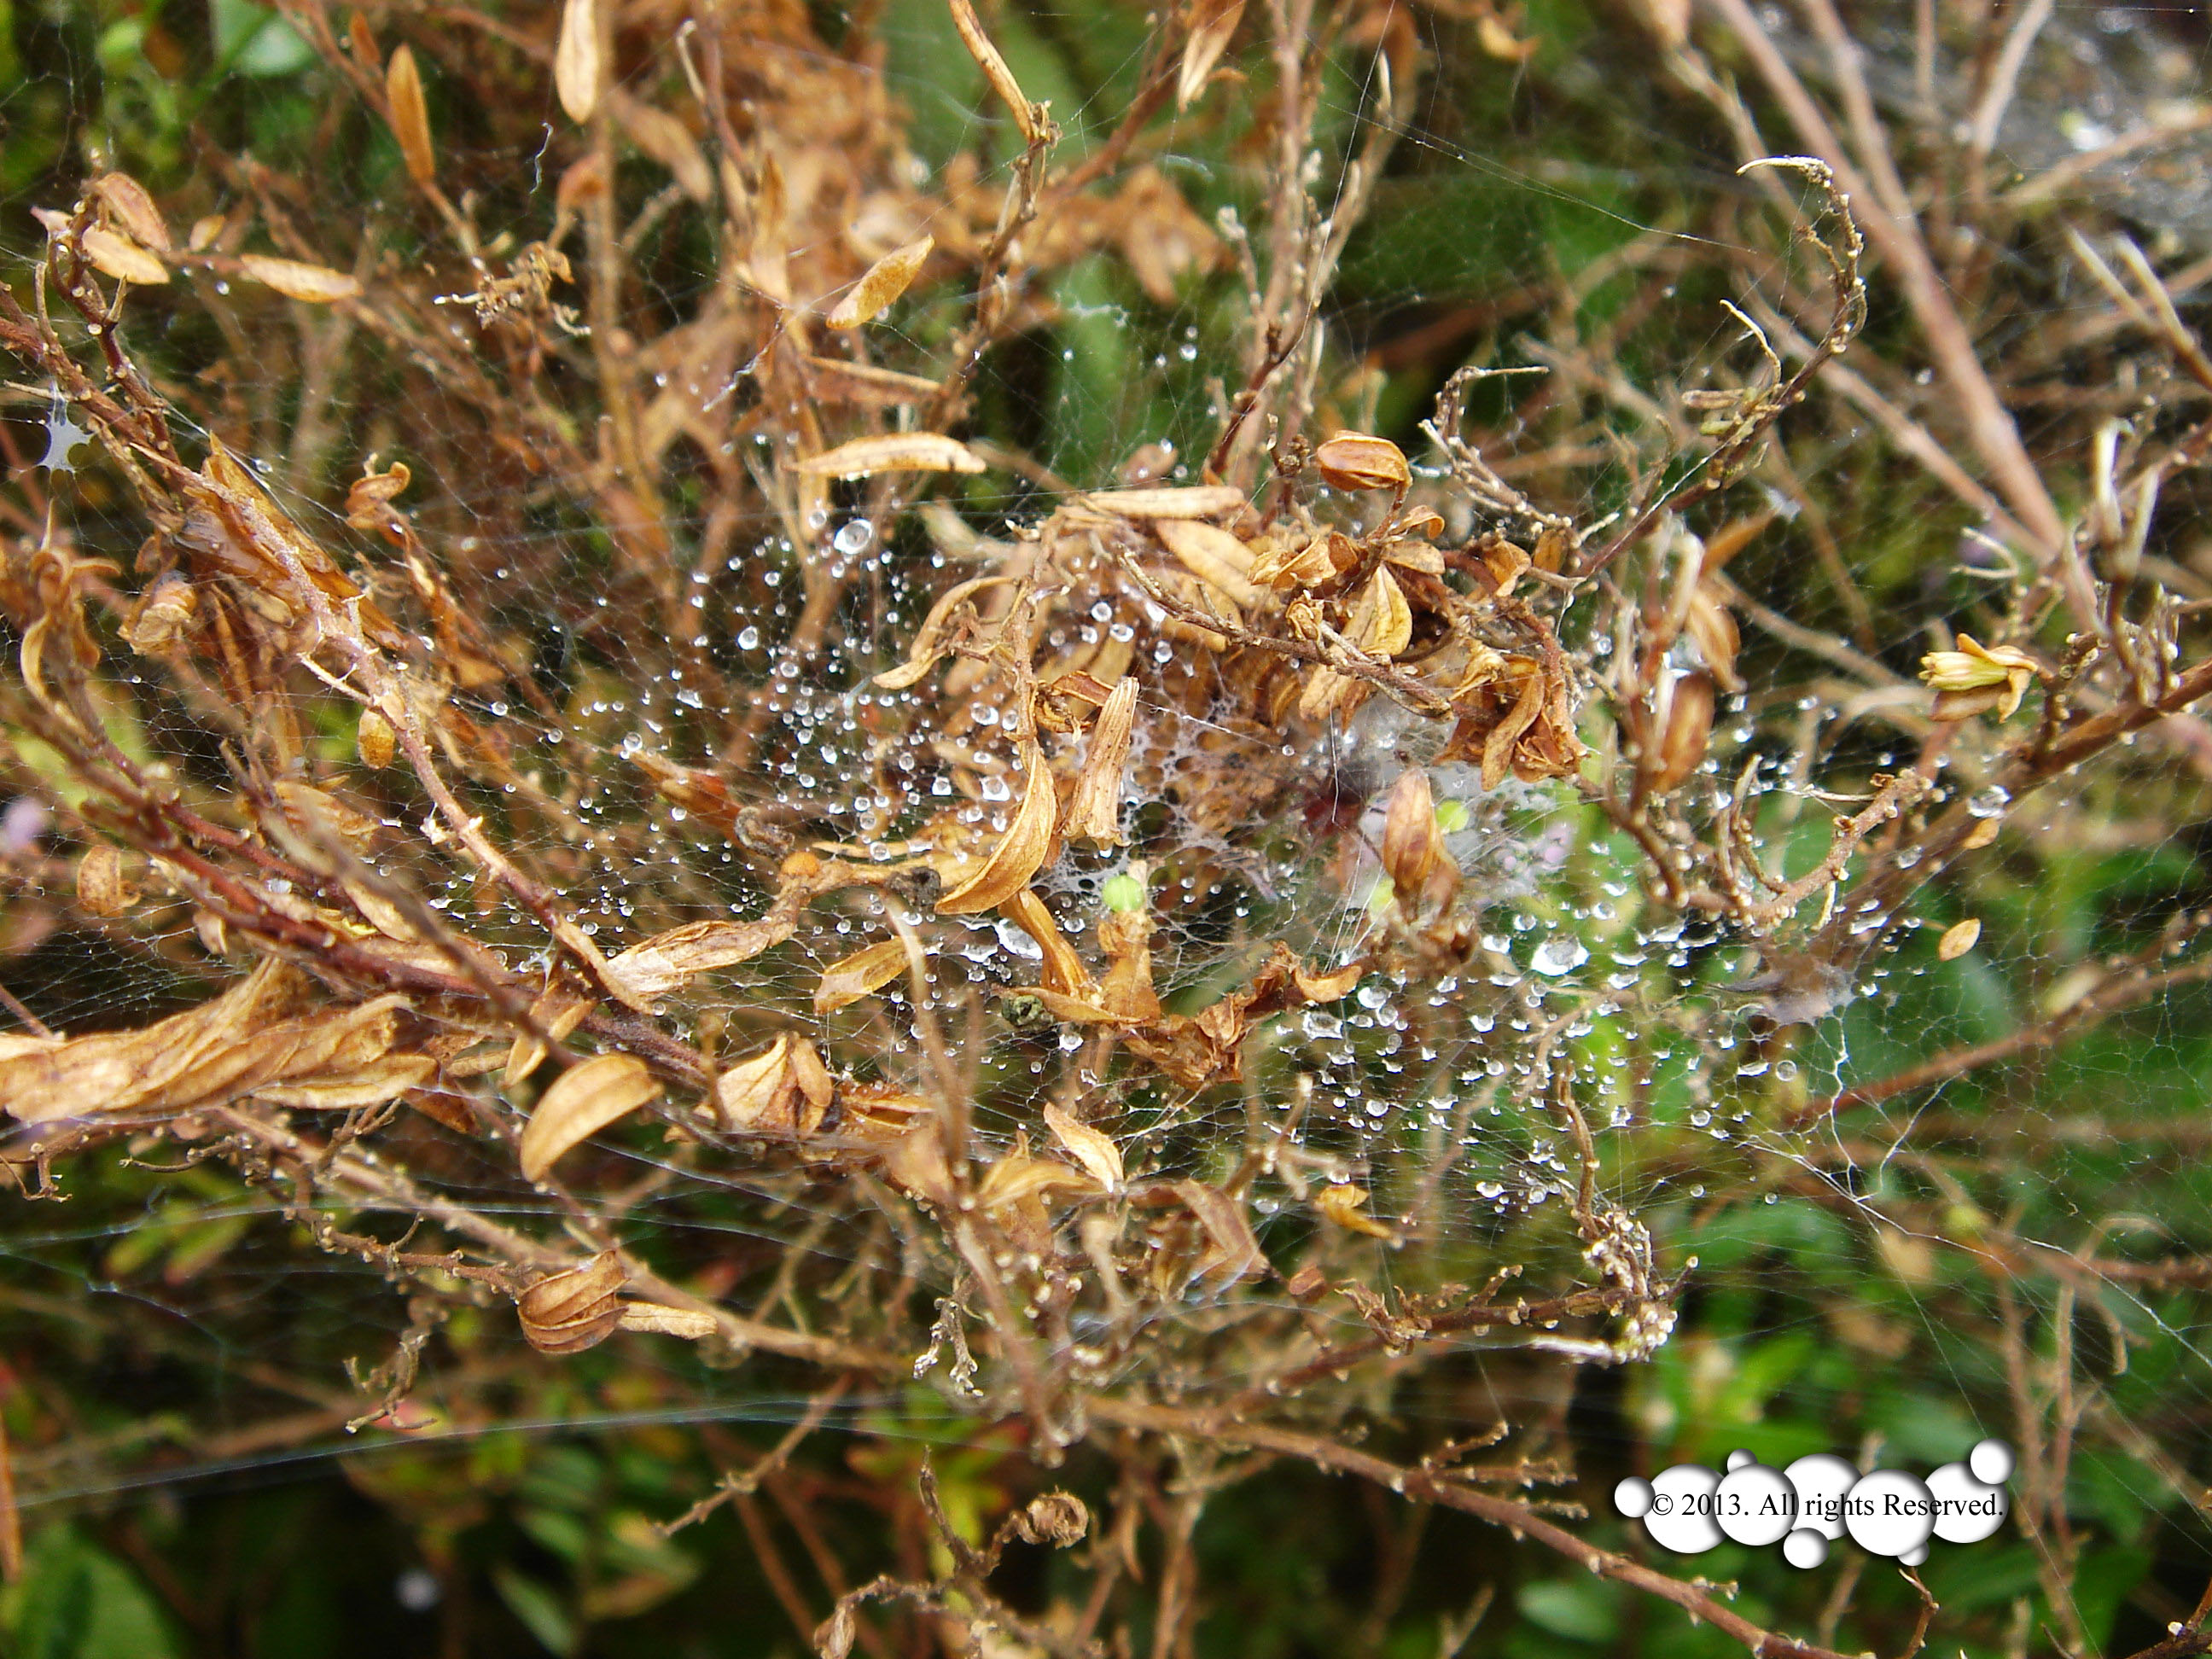 Spider Web, spiderman been here yesterday...